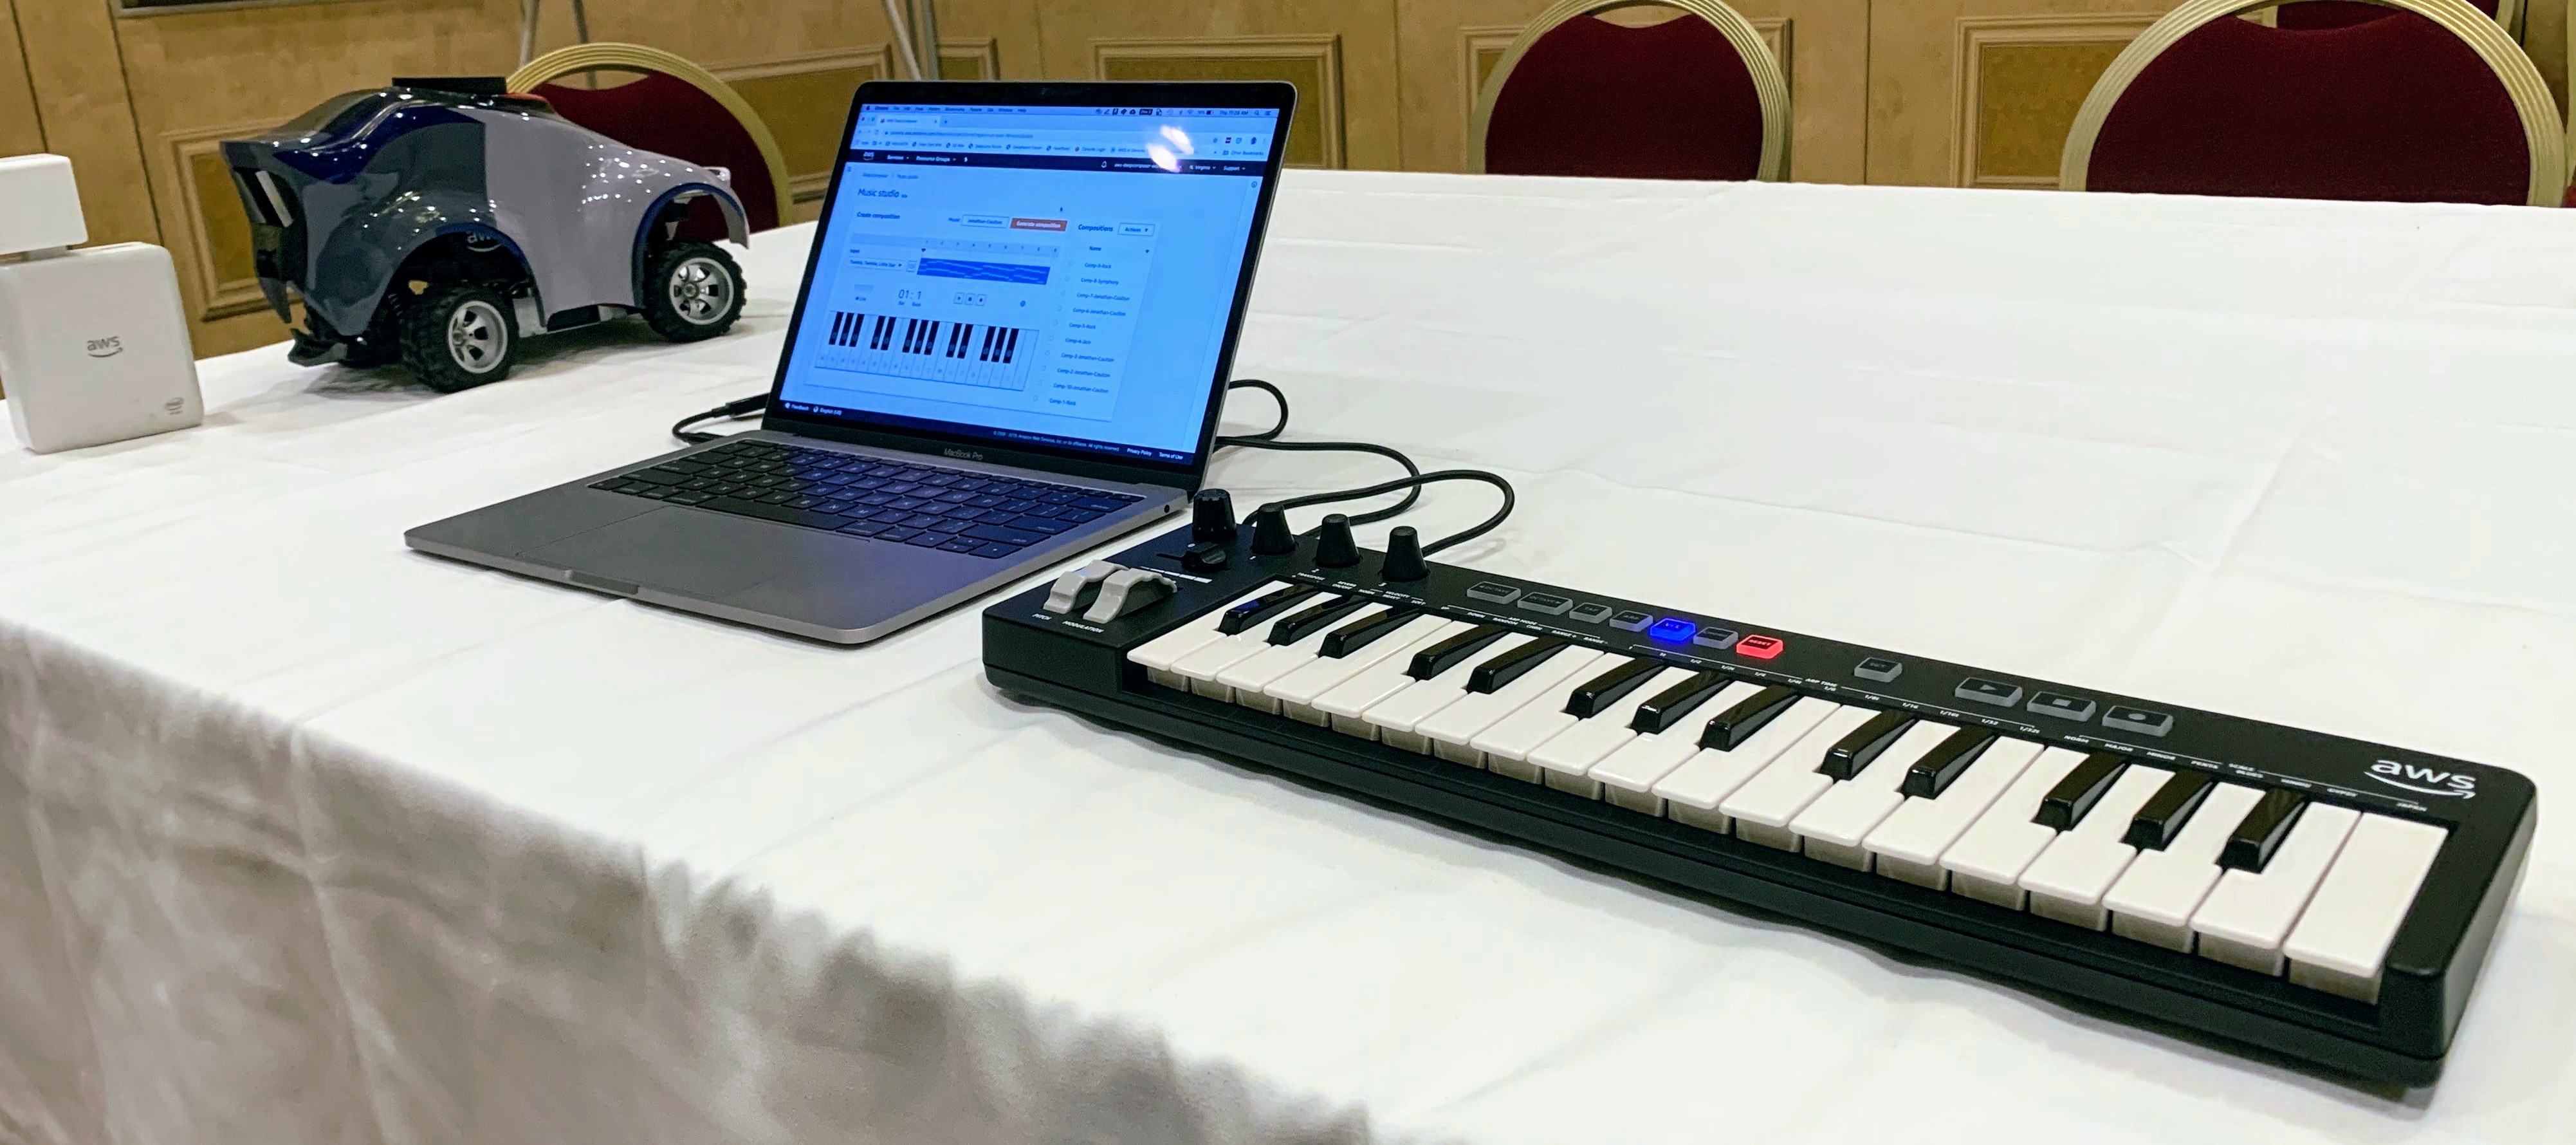 Why Aws Is Selling A Midi Keyboard To Teach Machine Learning Pnu